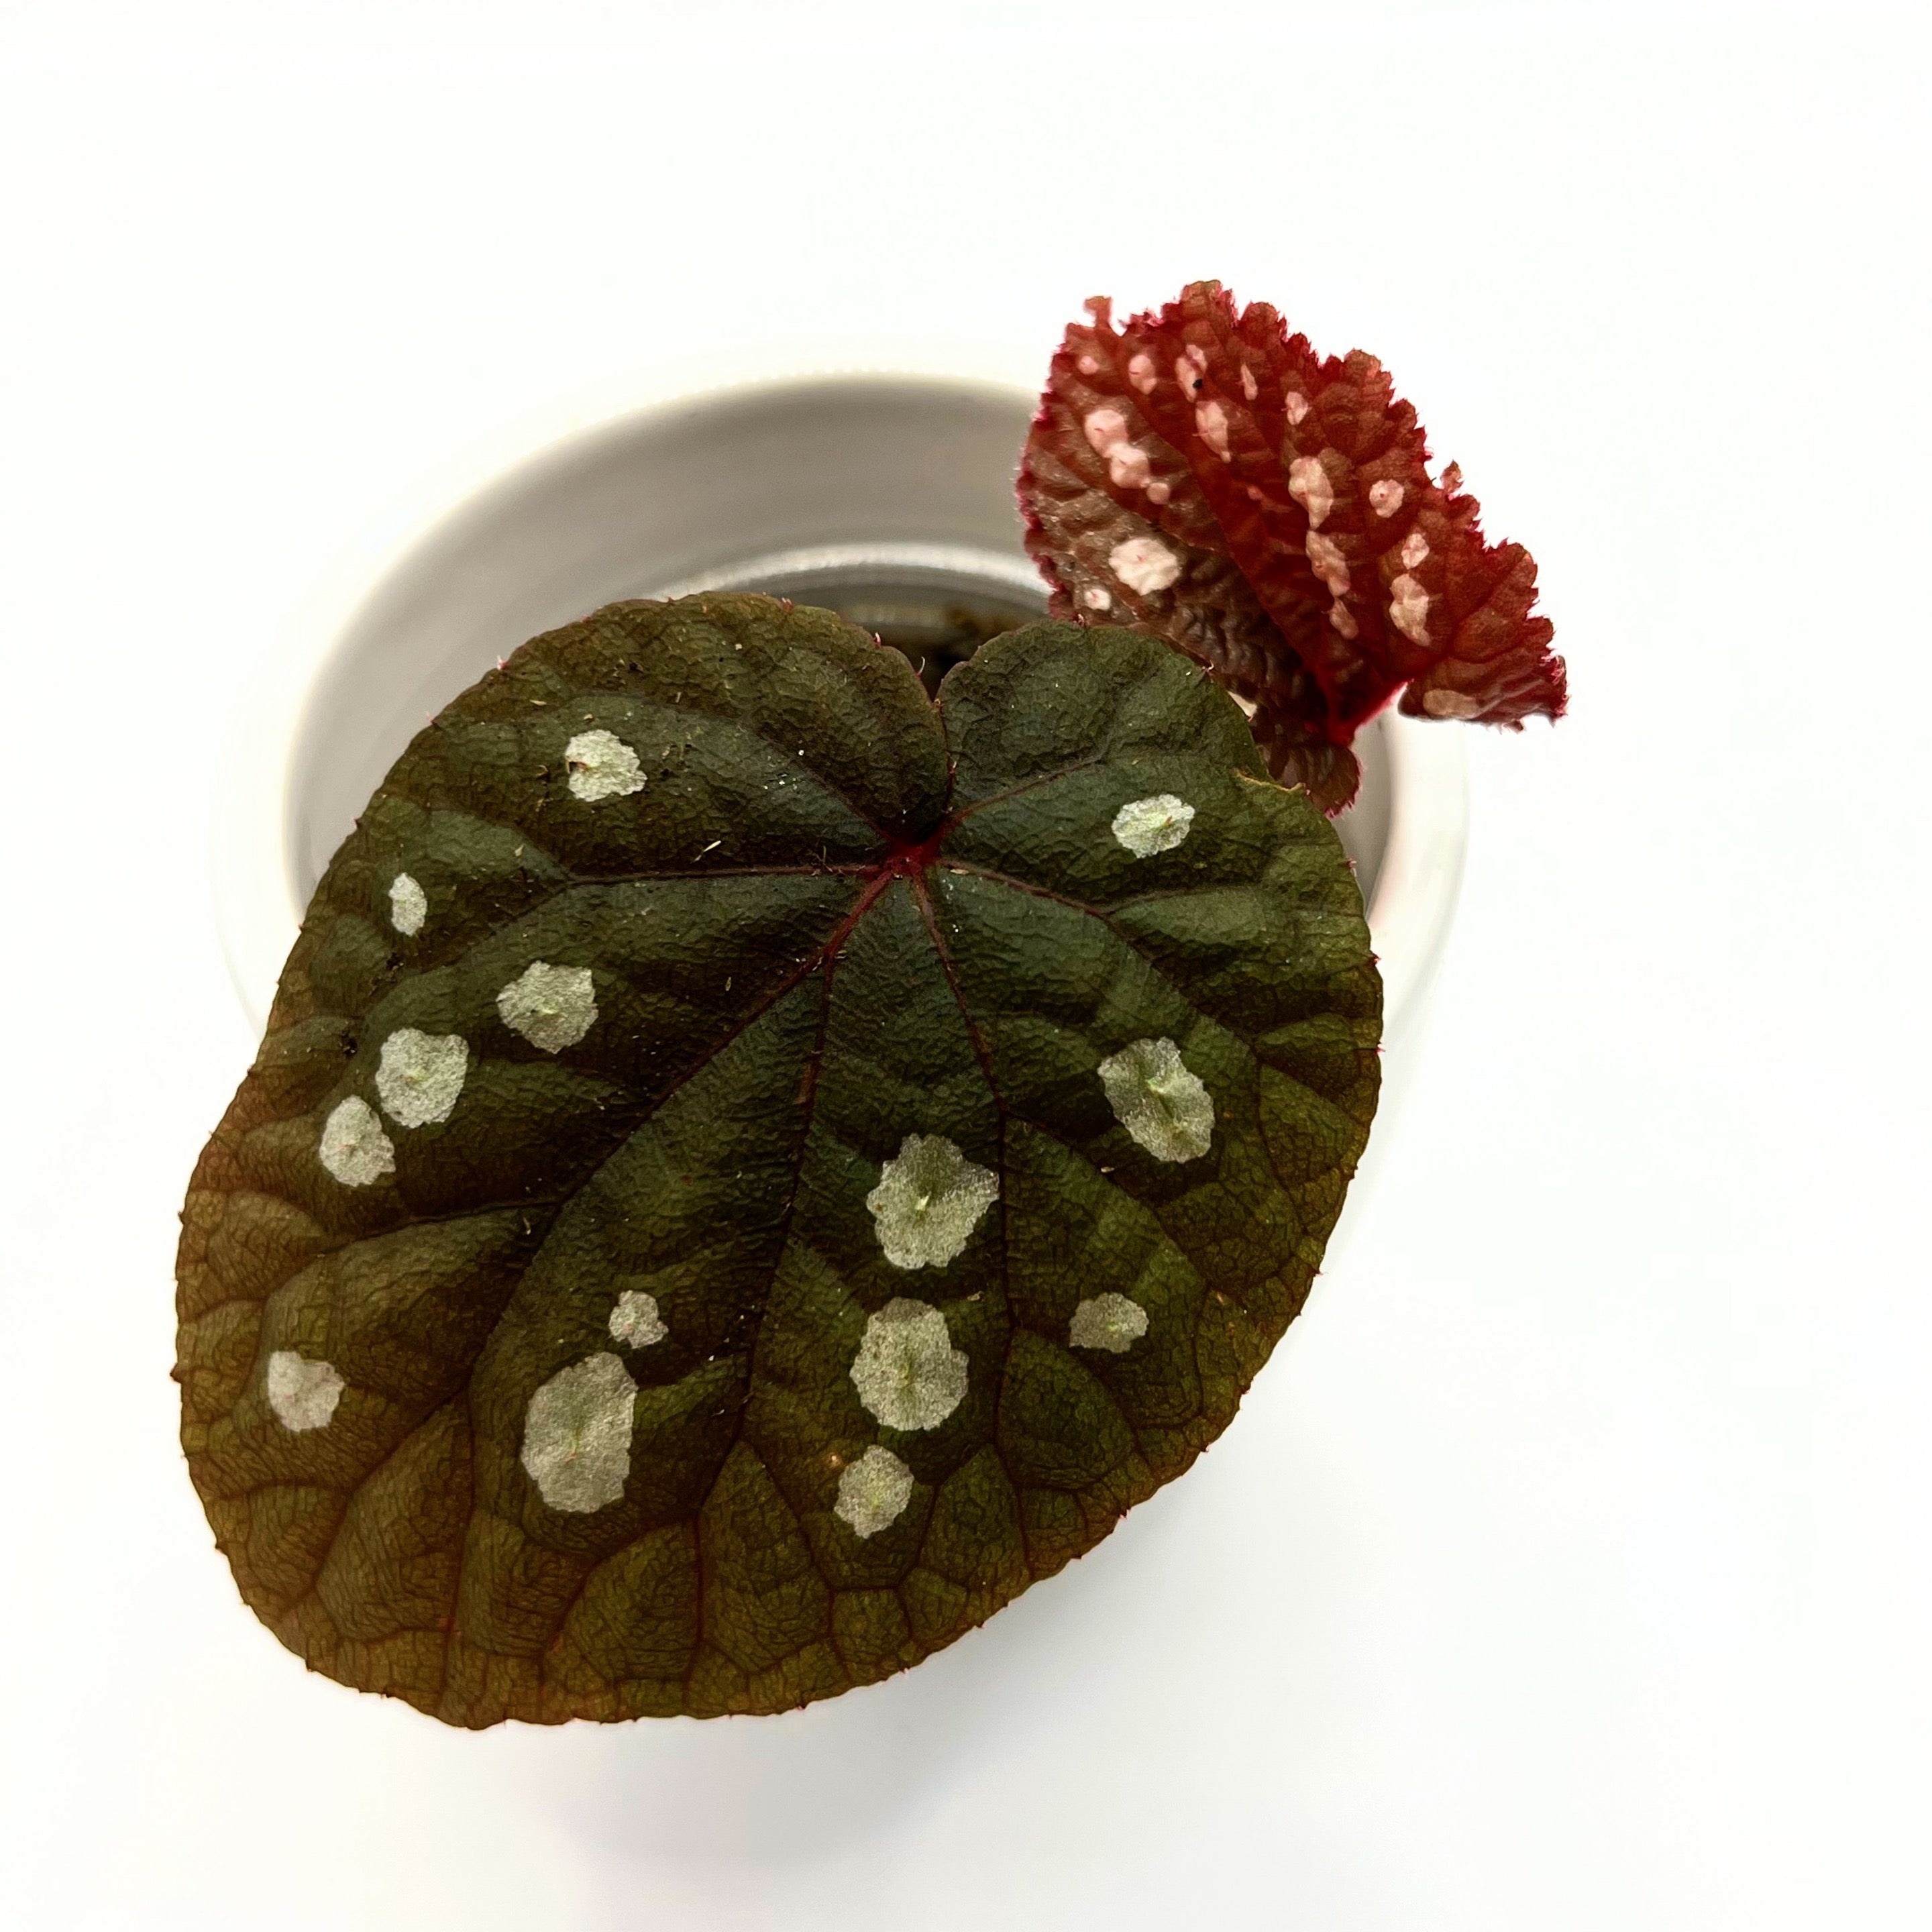 Begonia erectocarpa